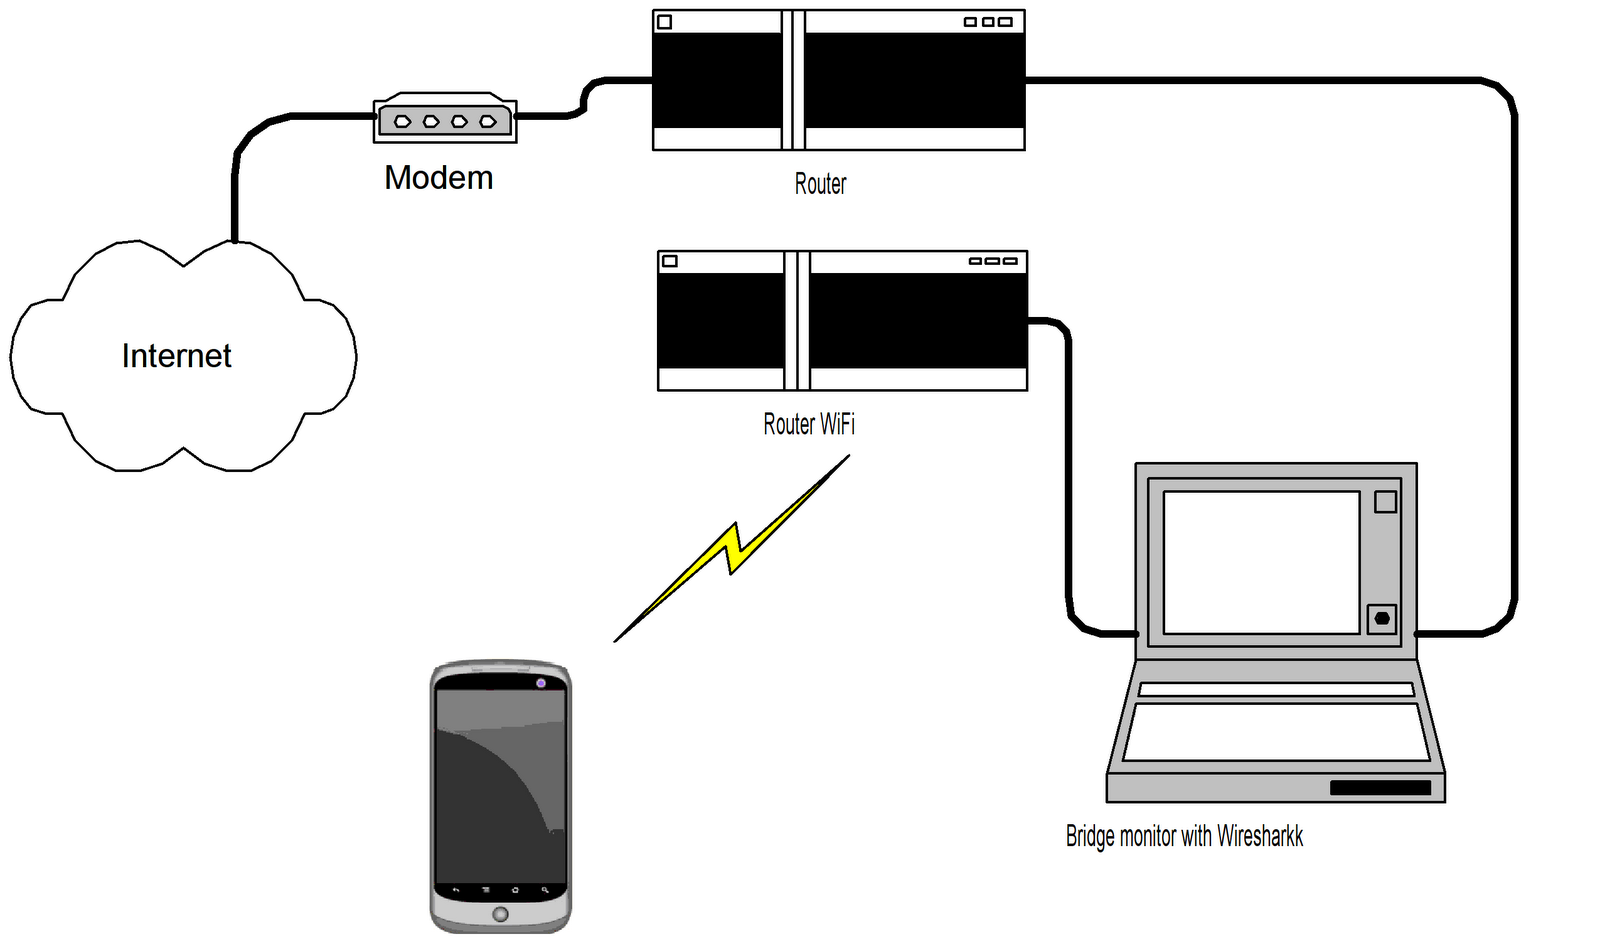 HAnix-diy - Public: Set up WiFi monitor with Wireshark